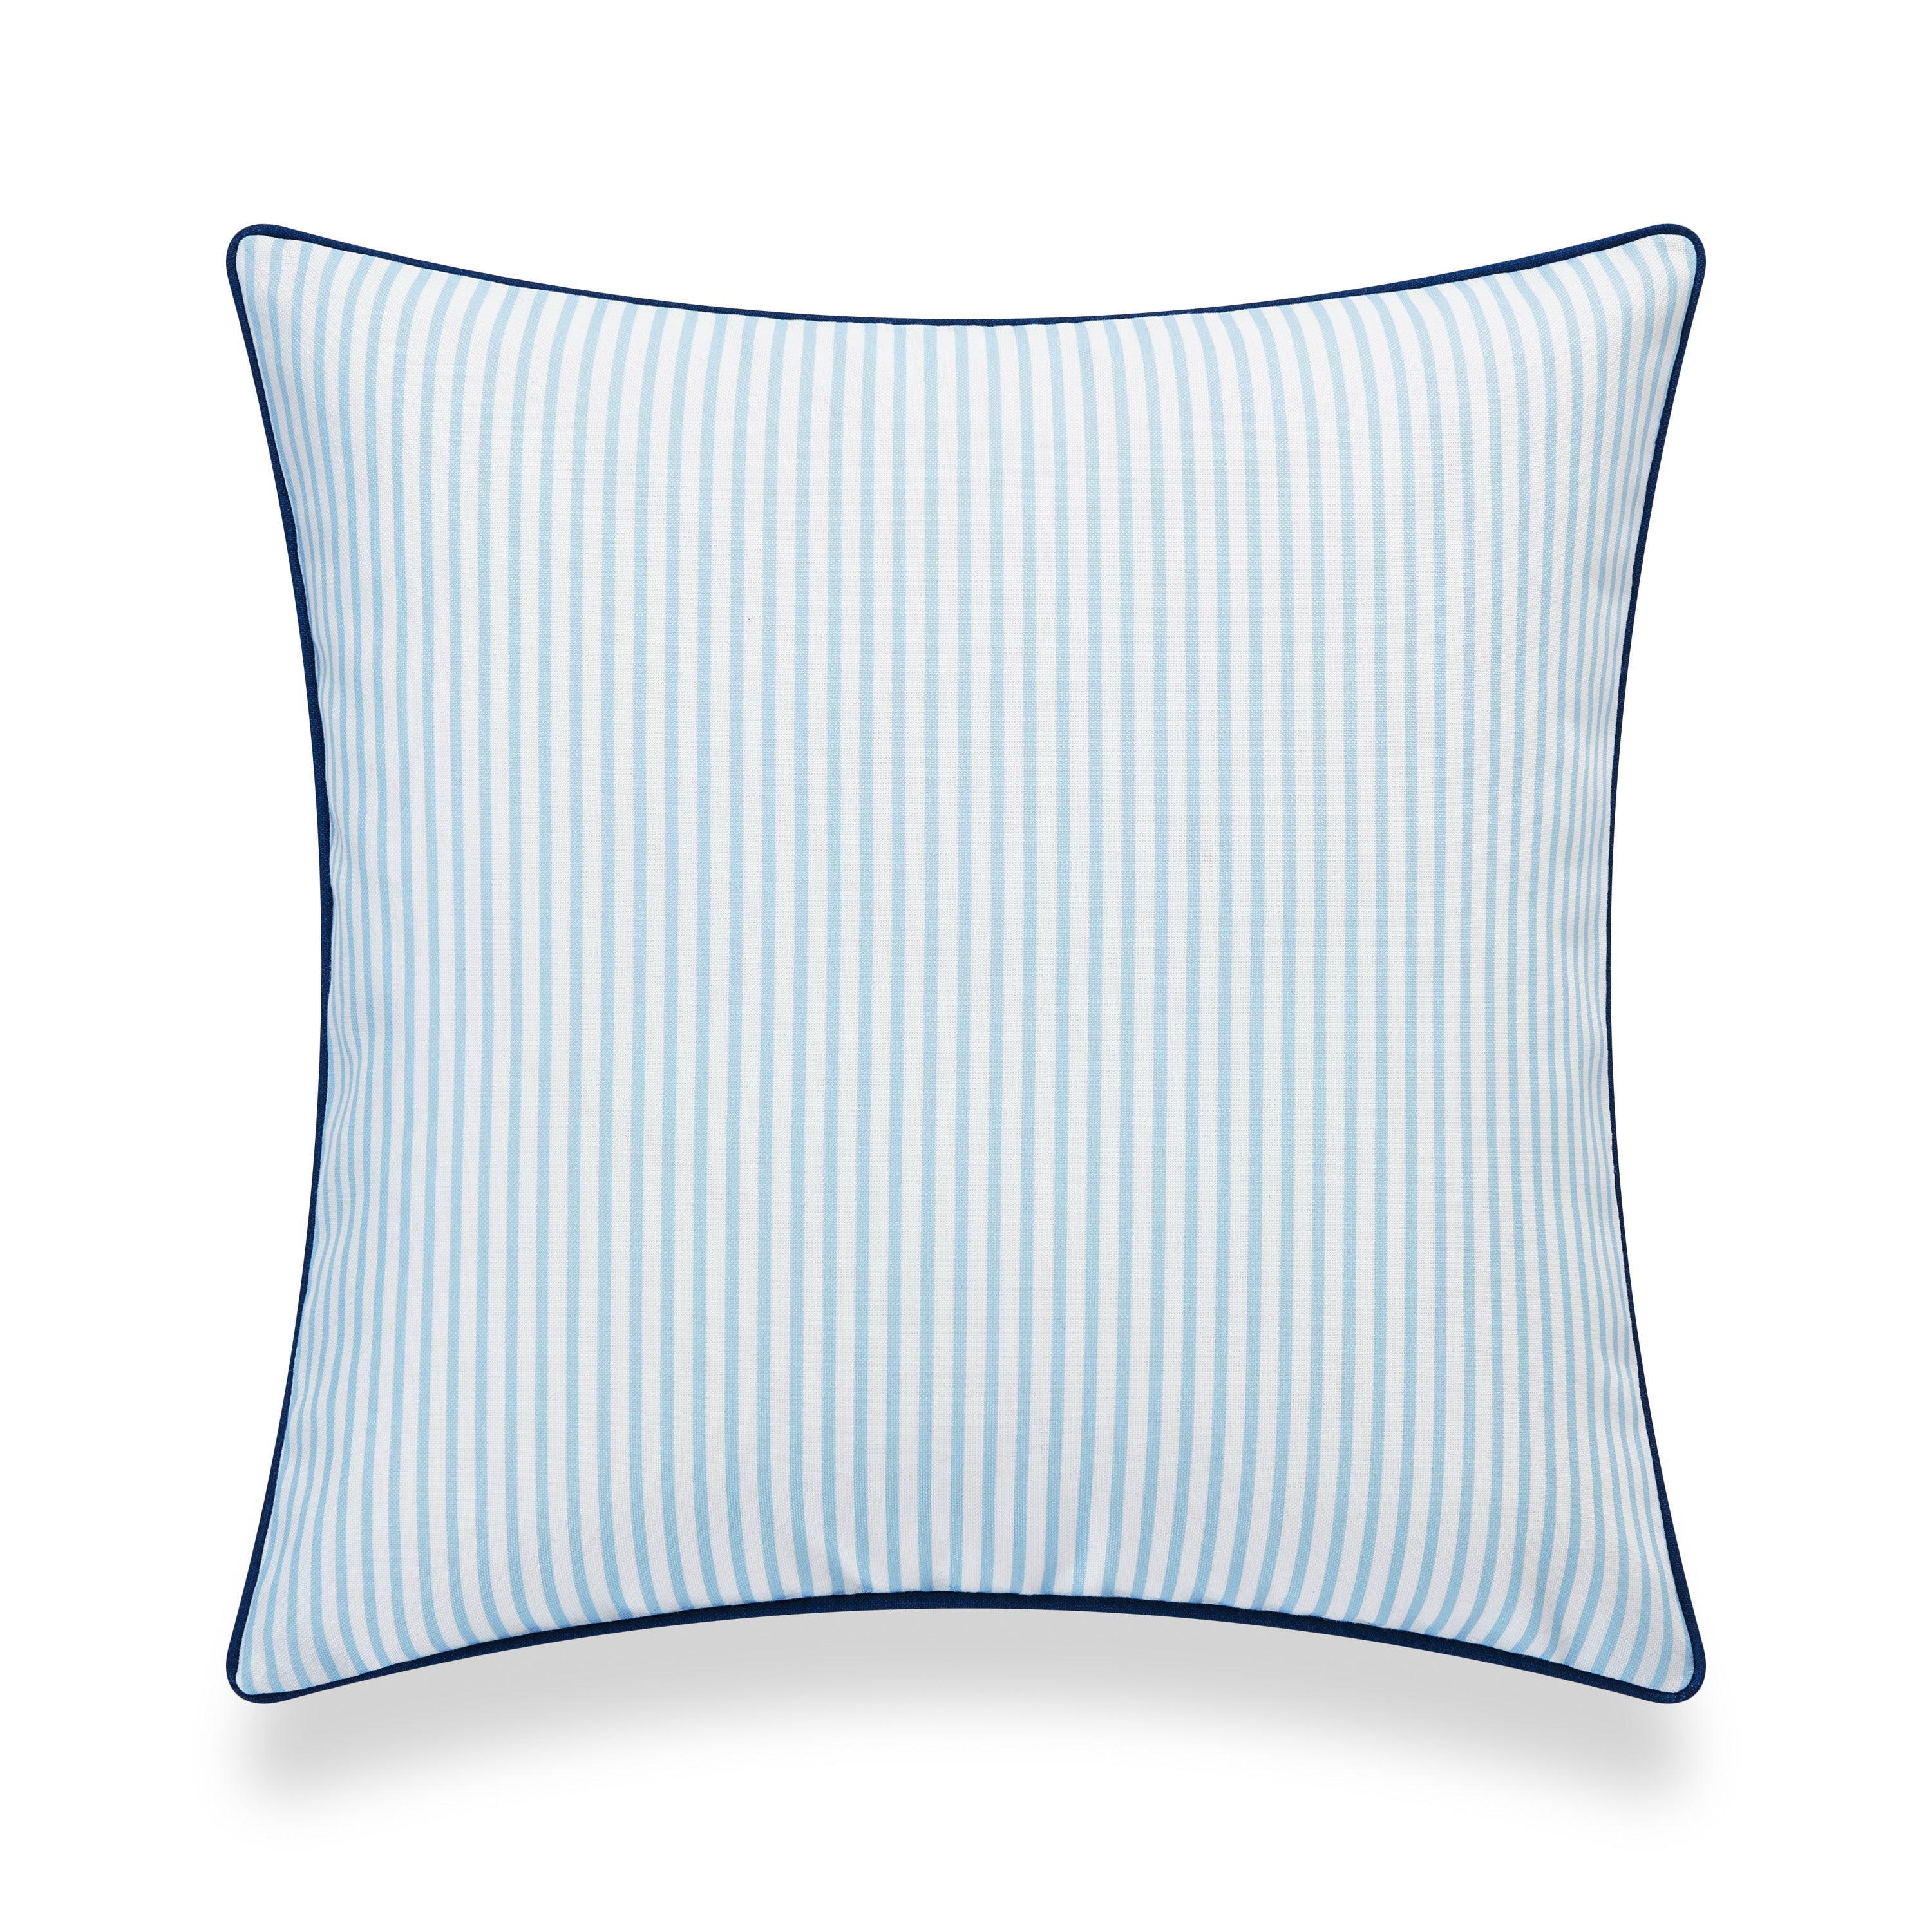 Coastal Hampton Style Indoor Outdoor Pillow Cover, Stripe, Blue, 20"x20"